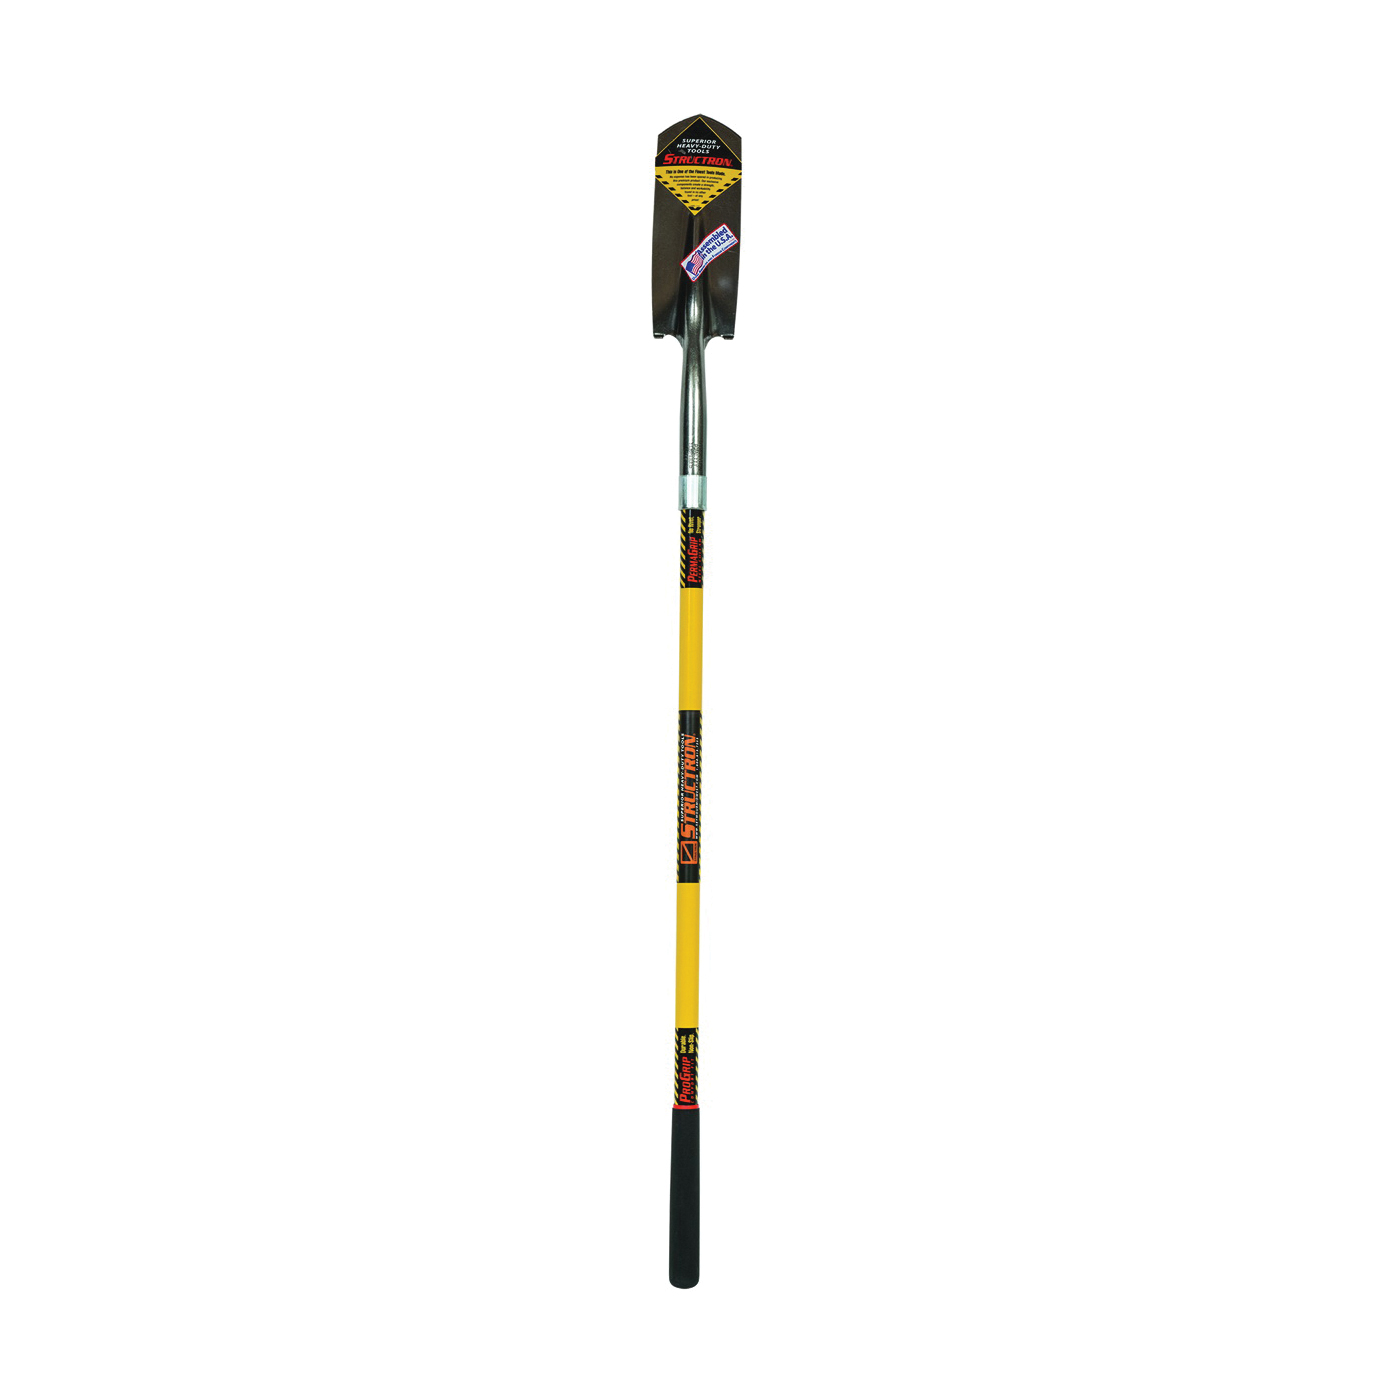 S700 SpringFlex 89184 Trenching Shovel, 4 in W Blade, 14 ga Gauge, Steel Blade, Fiberglass Handle, Long Handle